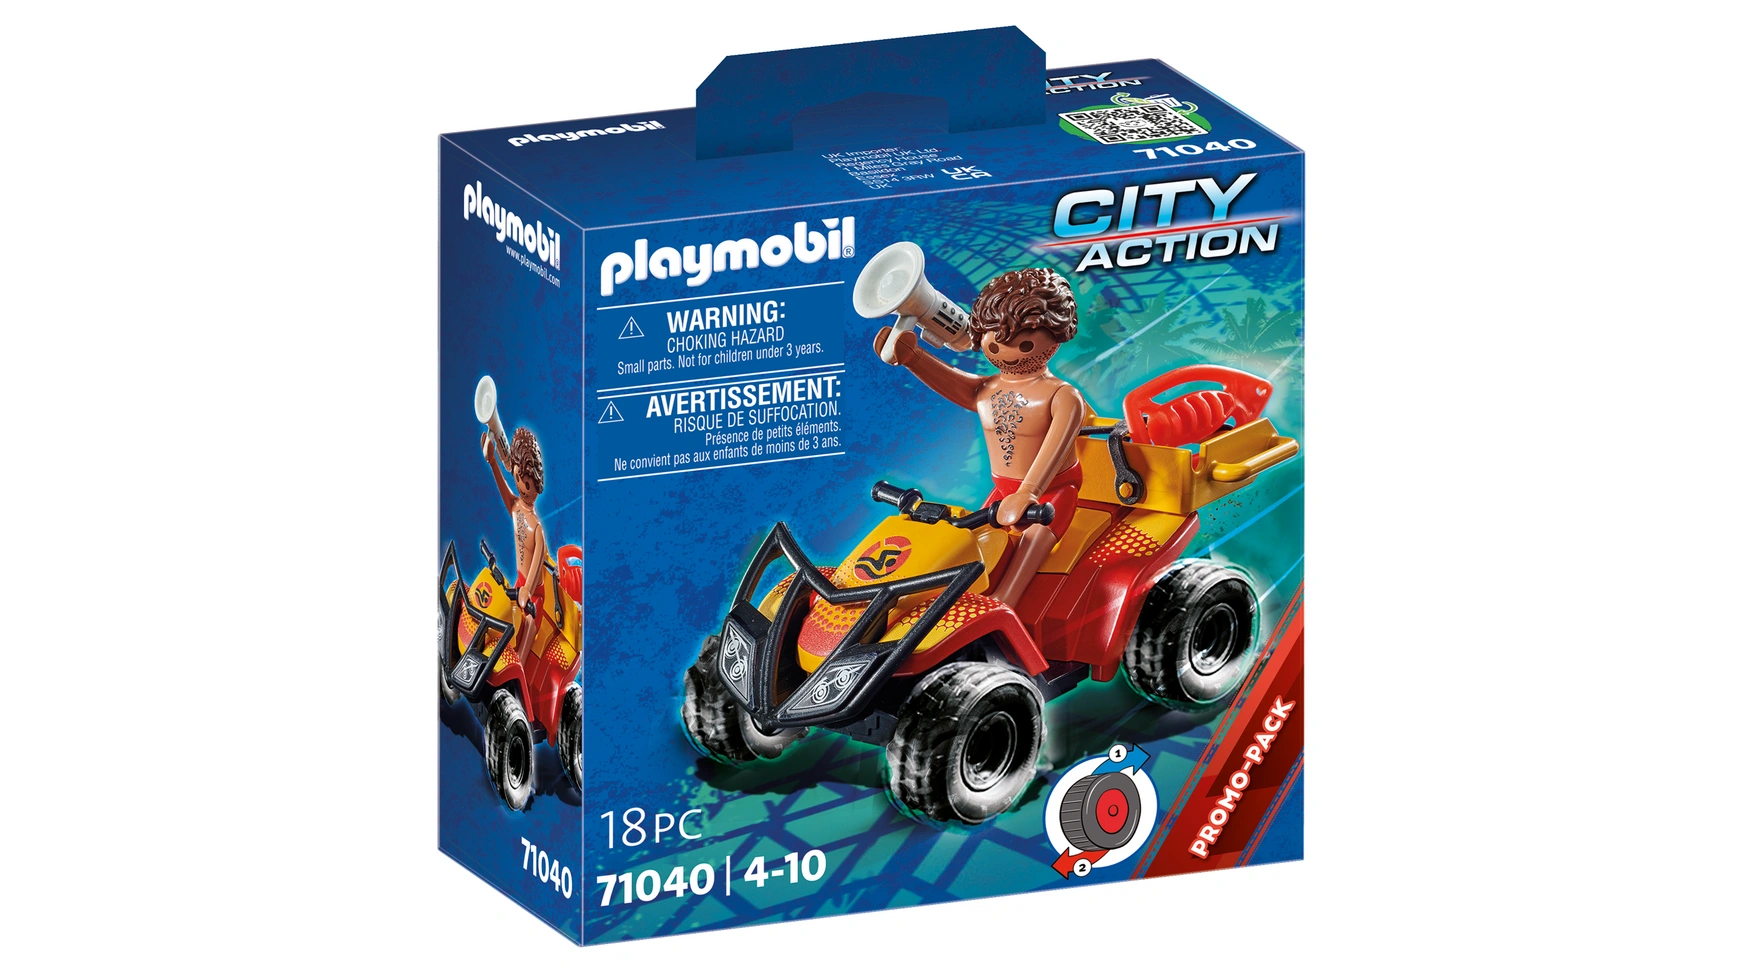 City action квадроцикл спасателя Playmobil